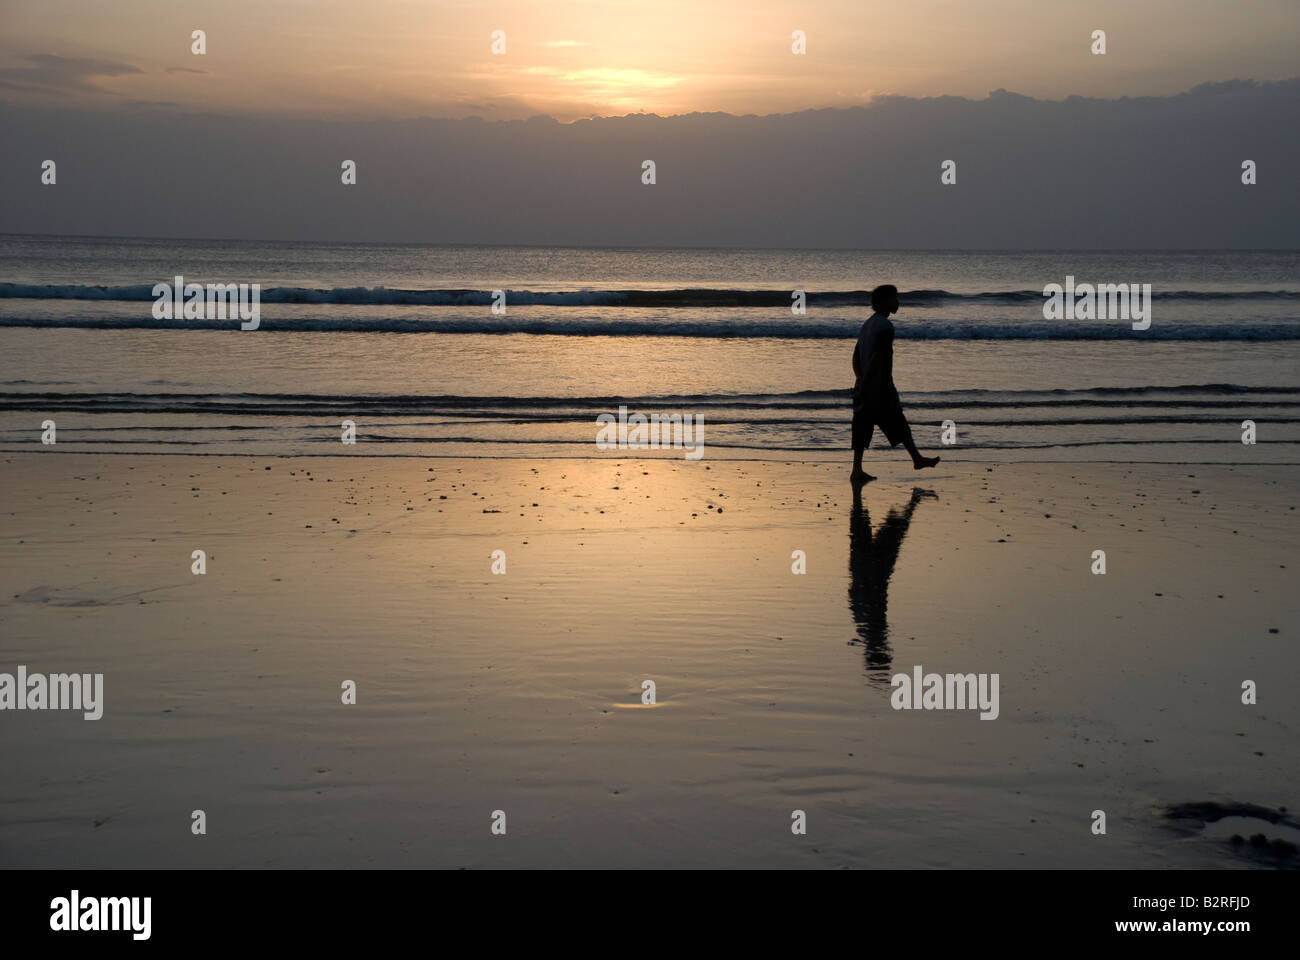 Kuta Bali Indonesien Badebucht Meer Surf Sonnenuntergang Mann Frau zu Fuß Kontemplation Wolke Himmel Wellen kräuseln Reflexion Silhouette Stockfoto